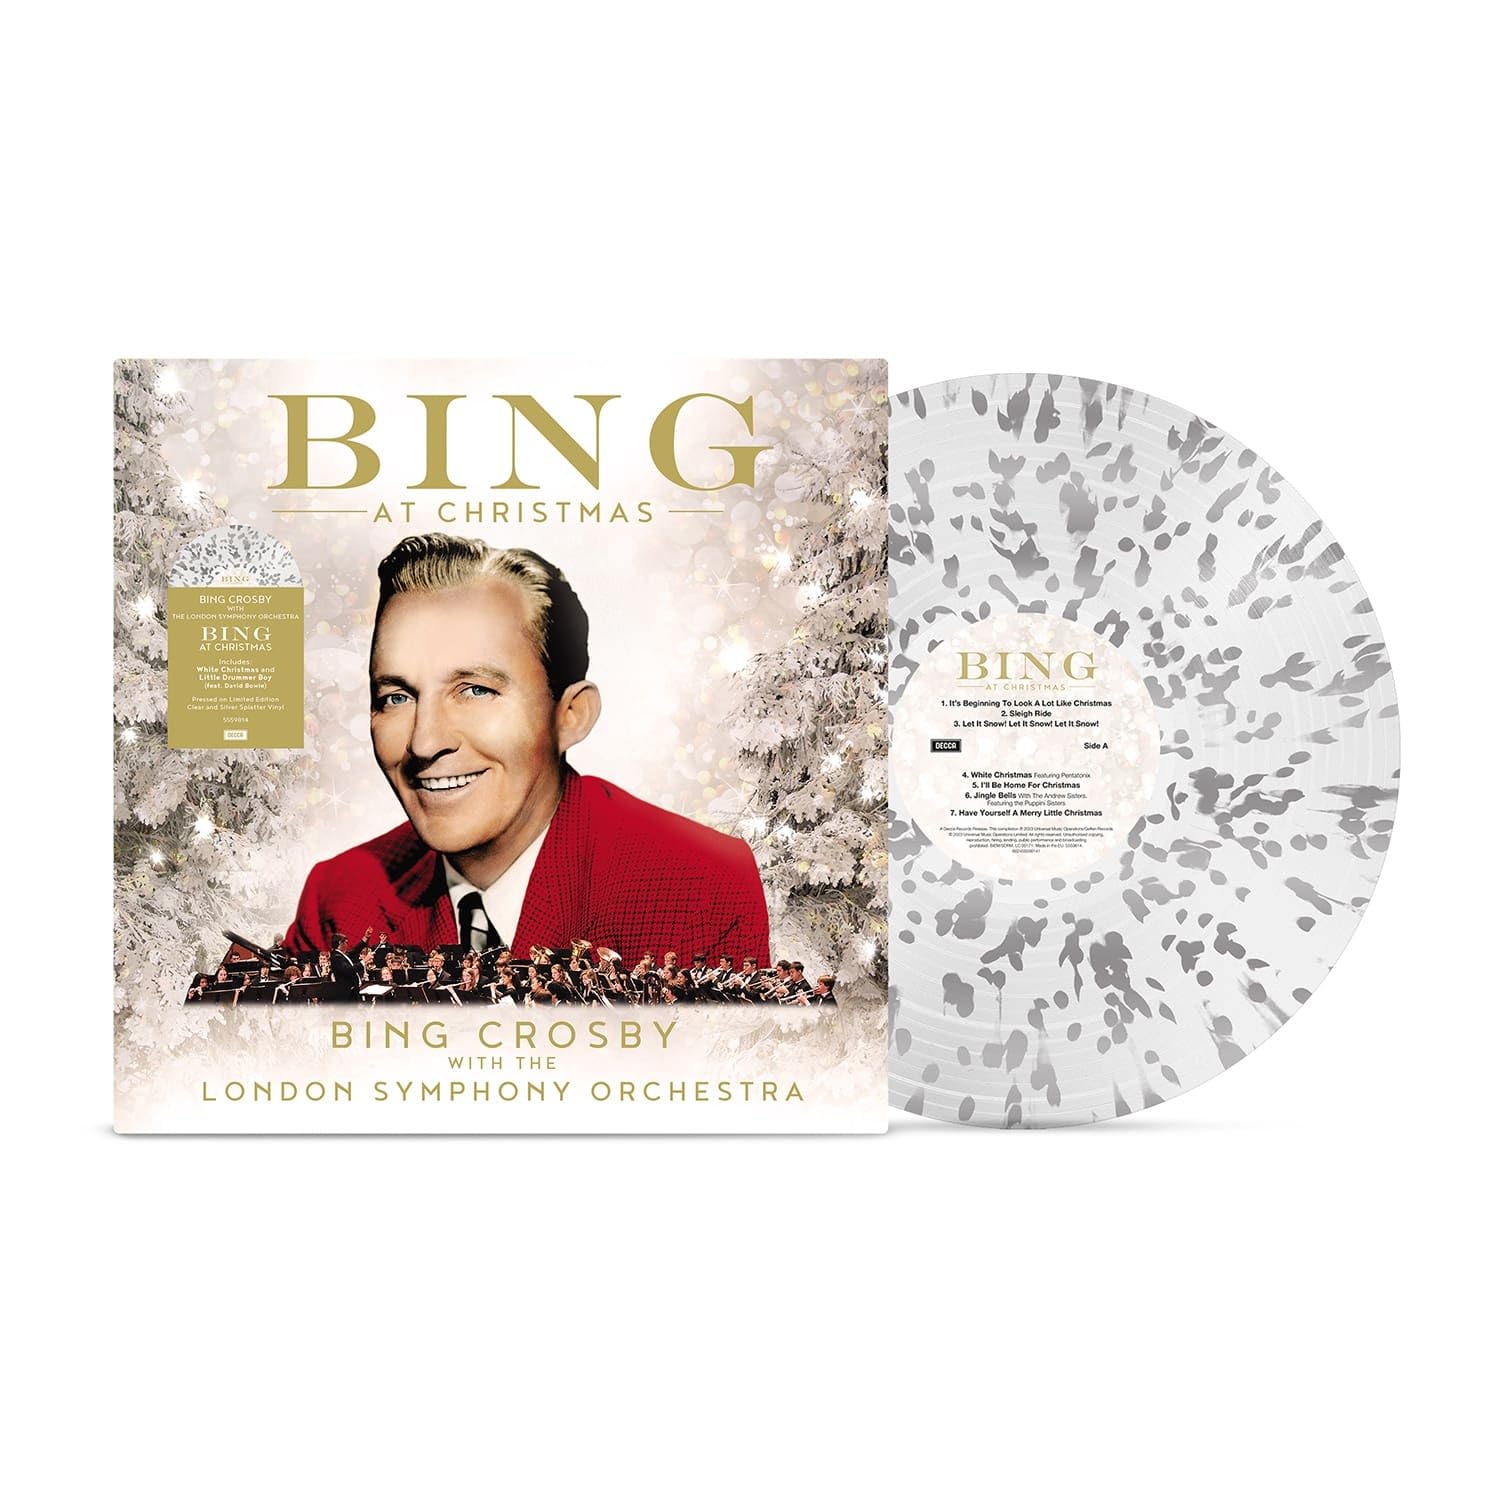 Bing At Christmas (Vinyl)